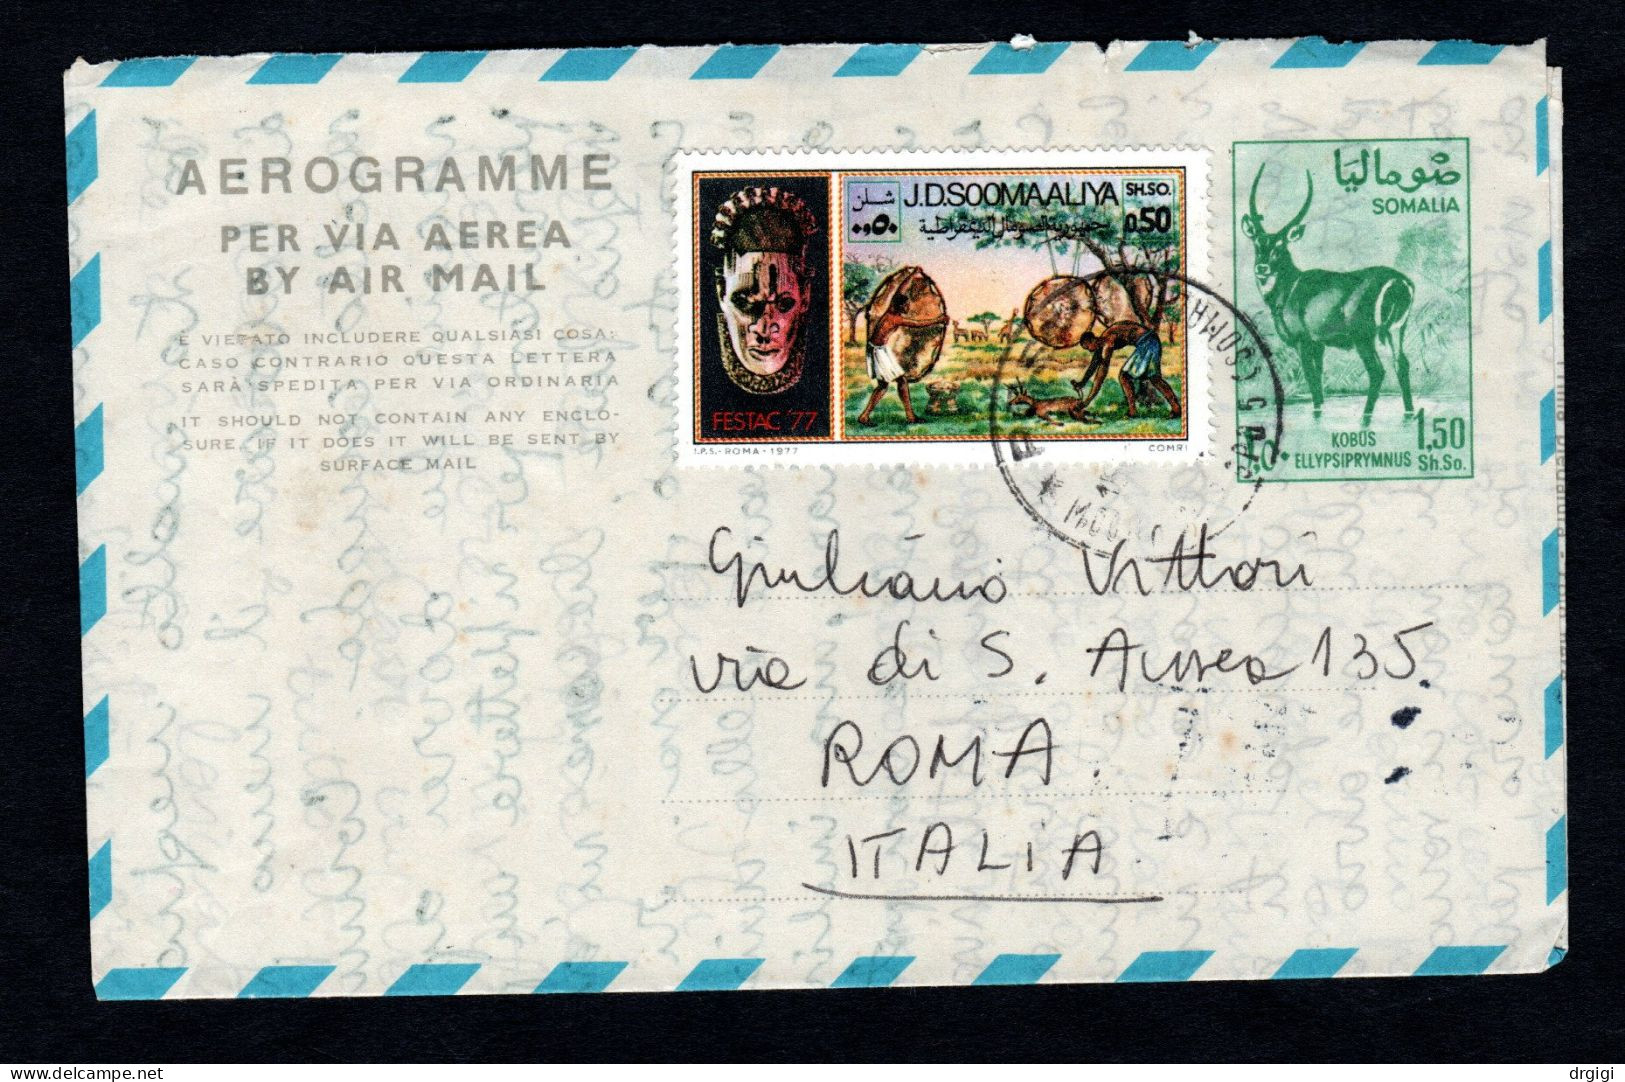 SOMALIA, 1970, INTERO POSTALE A 5 CEI, MOGADISCIO X GLI USA , AEROGRAMMA - Somalia